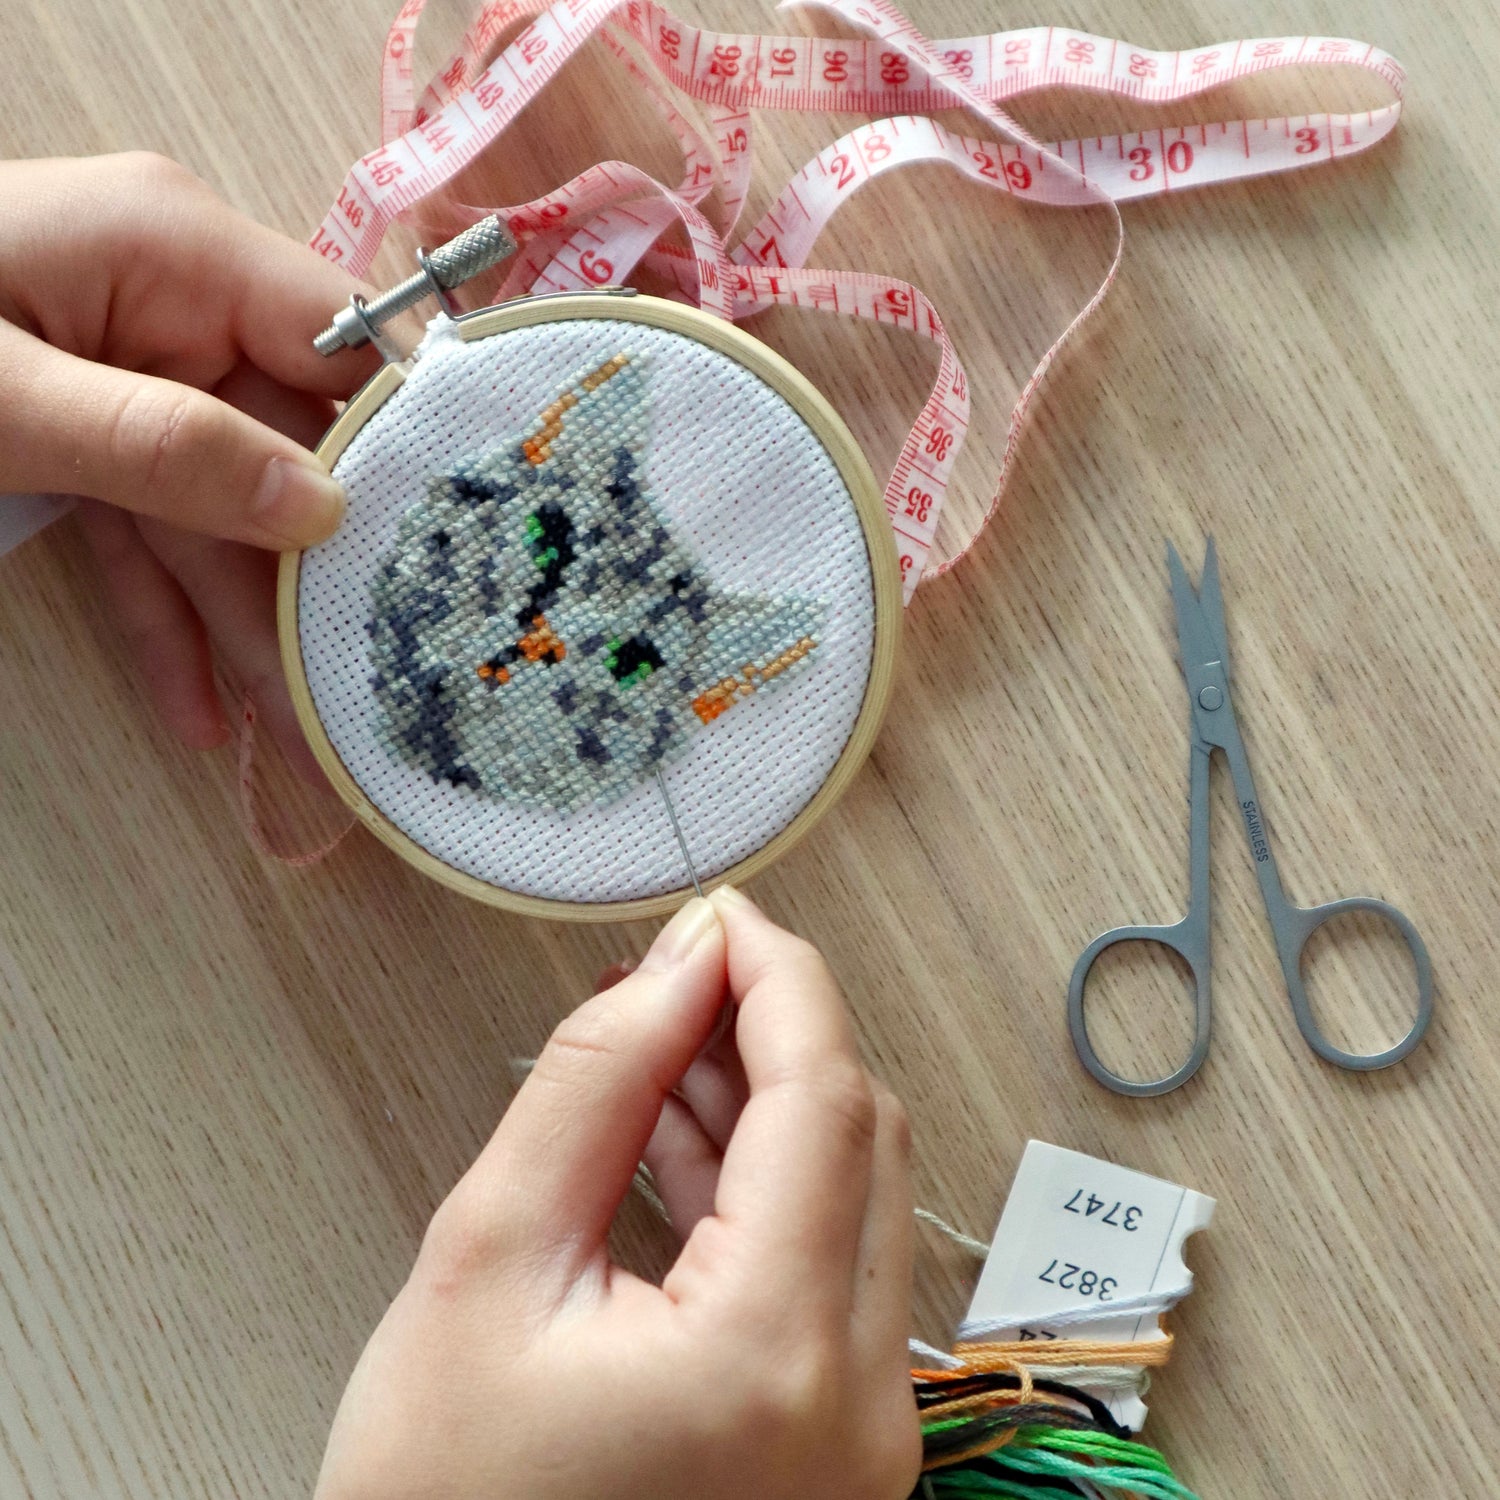 Embroidery Kit - Picnic, Stitching Kit, Gift Ideas